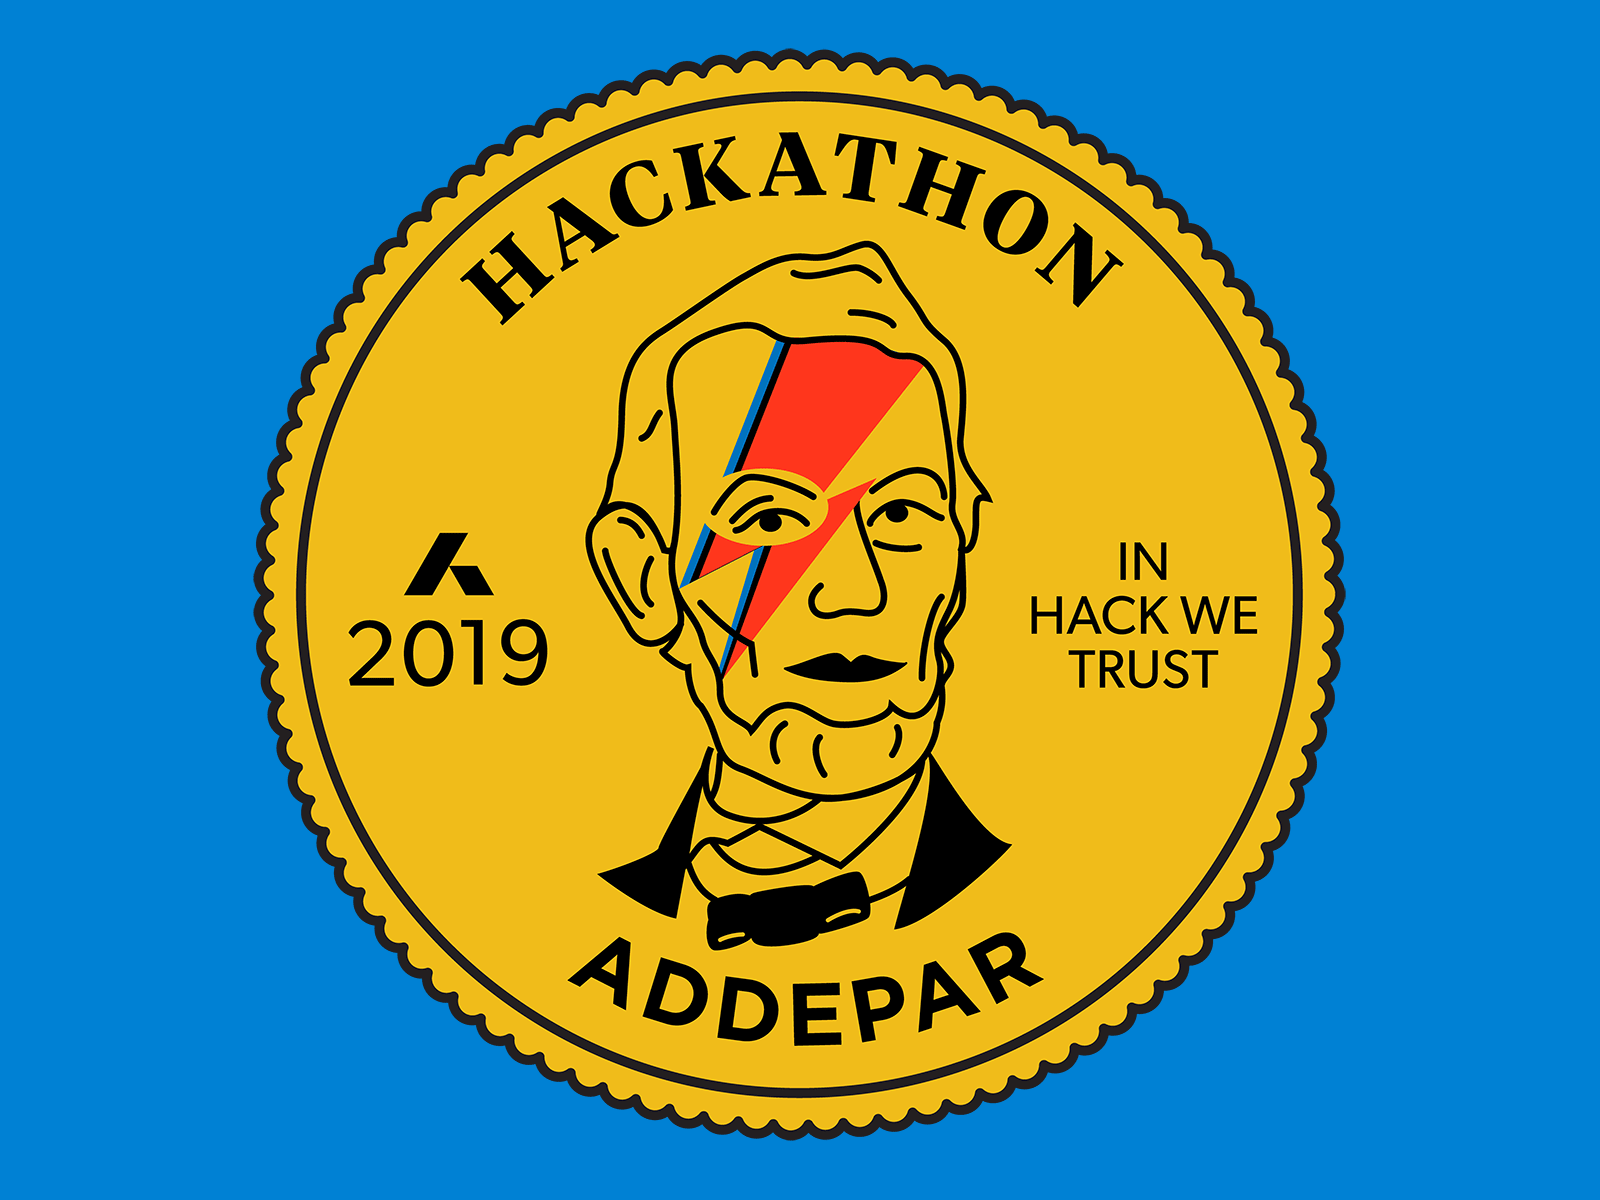 Addepar Hackathon, Fall 2019